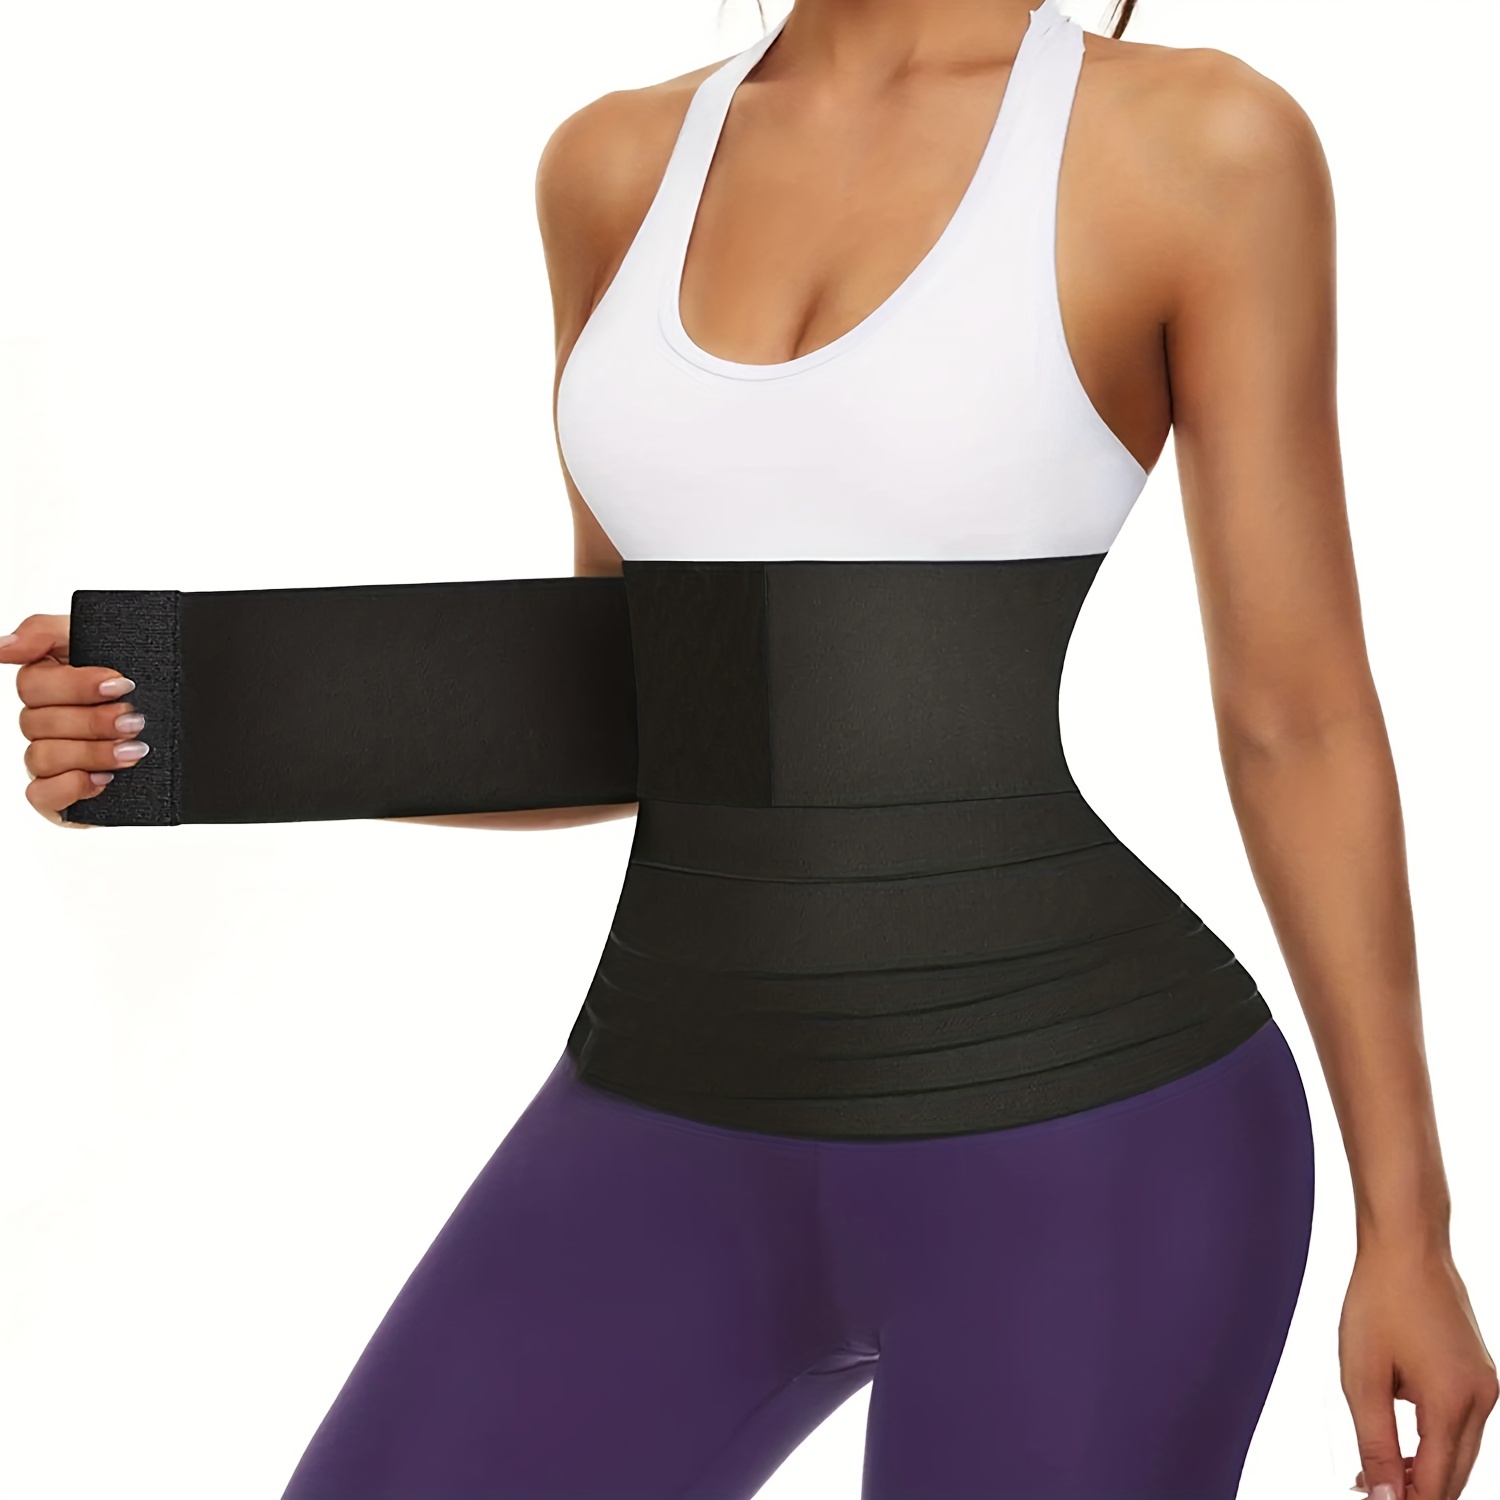 Shape Your Waist Instantly - Women's Waist Trainer Belt Wrap Bandage